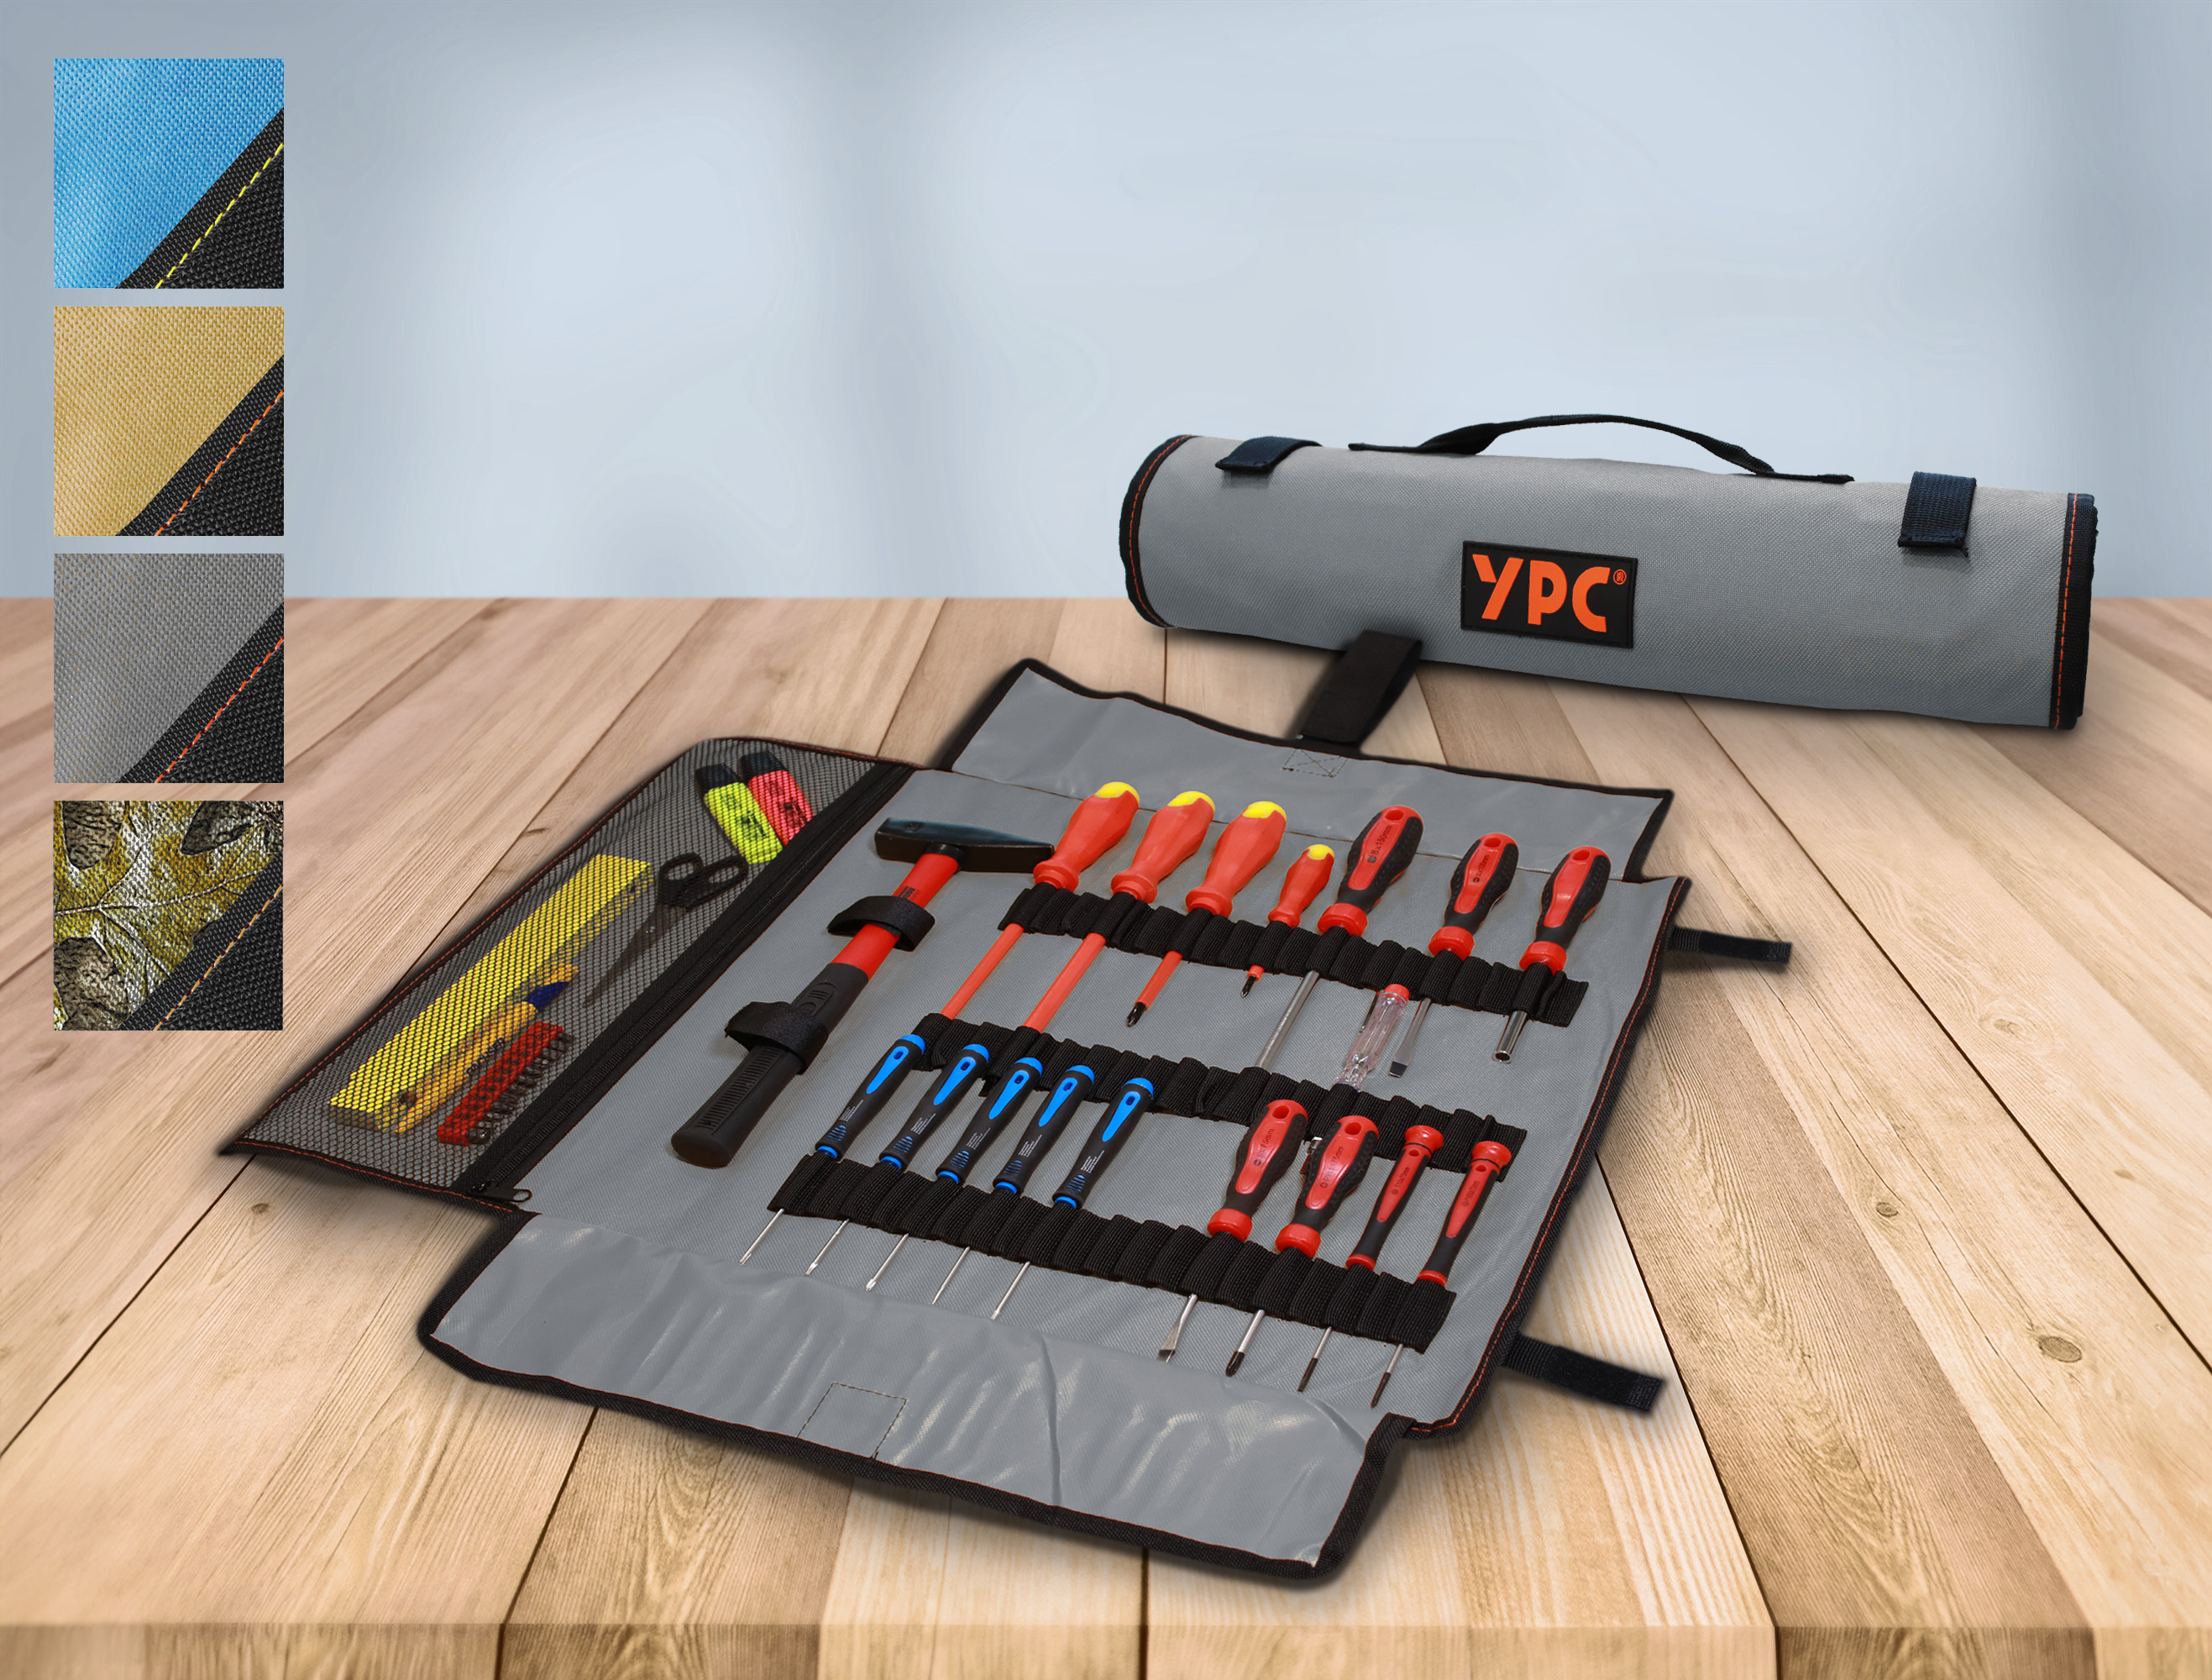 "VarioRoll XXL" tool roll bag 62x44cm, mesh pocket and 60 straps, grey-black